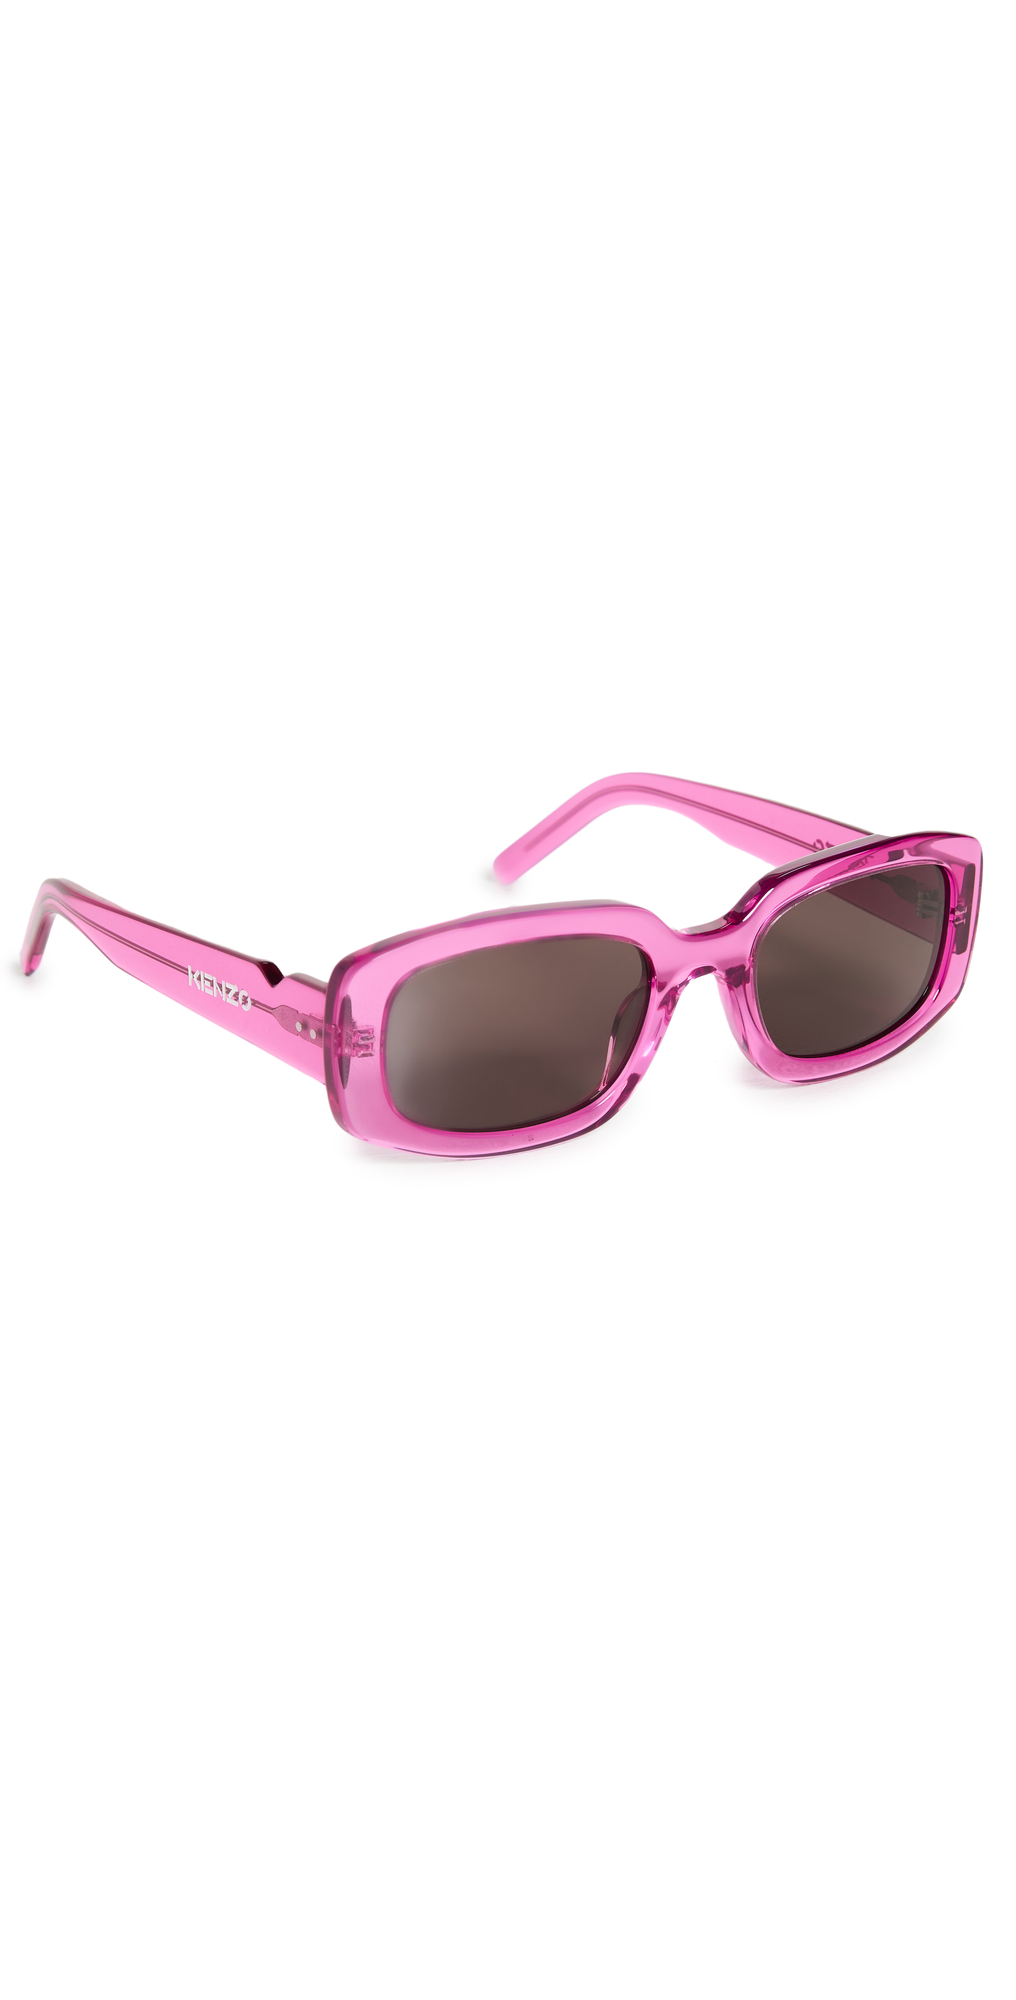 KENZO Narrow Rectangular Sunglasses in brown / pink